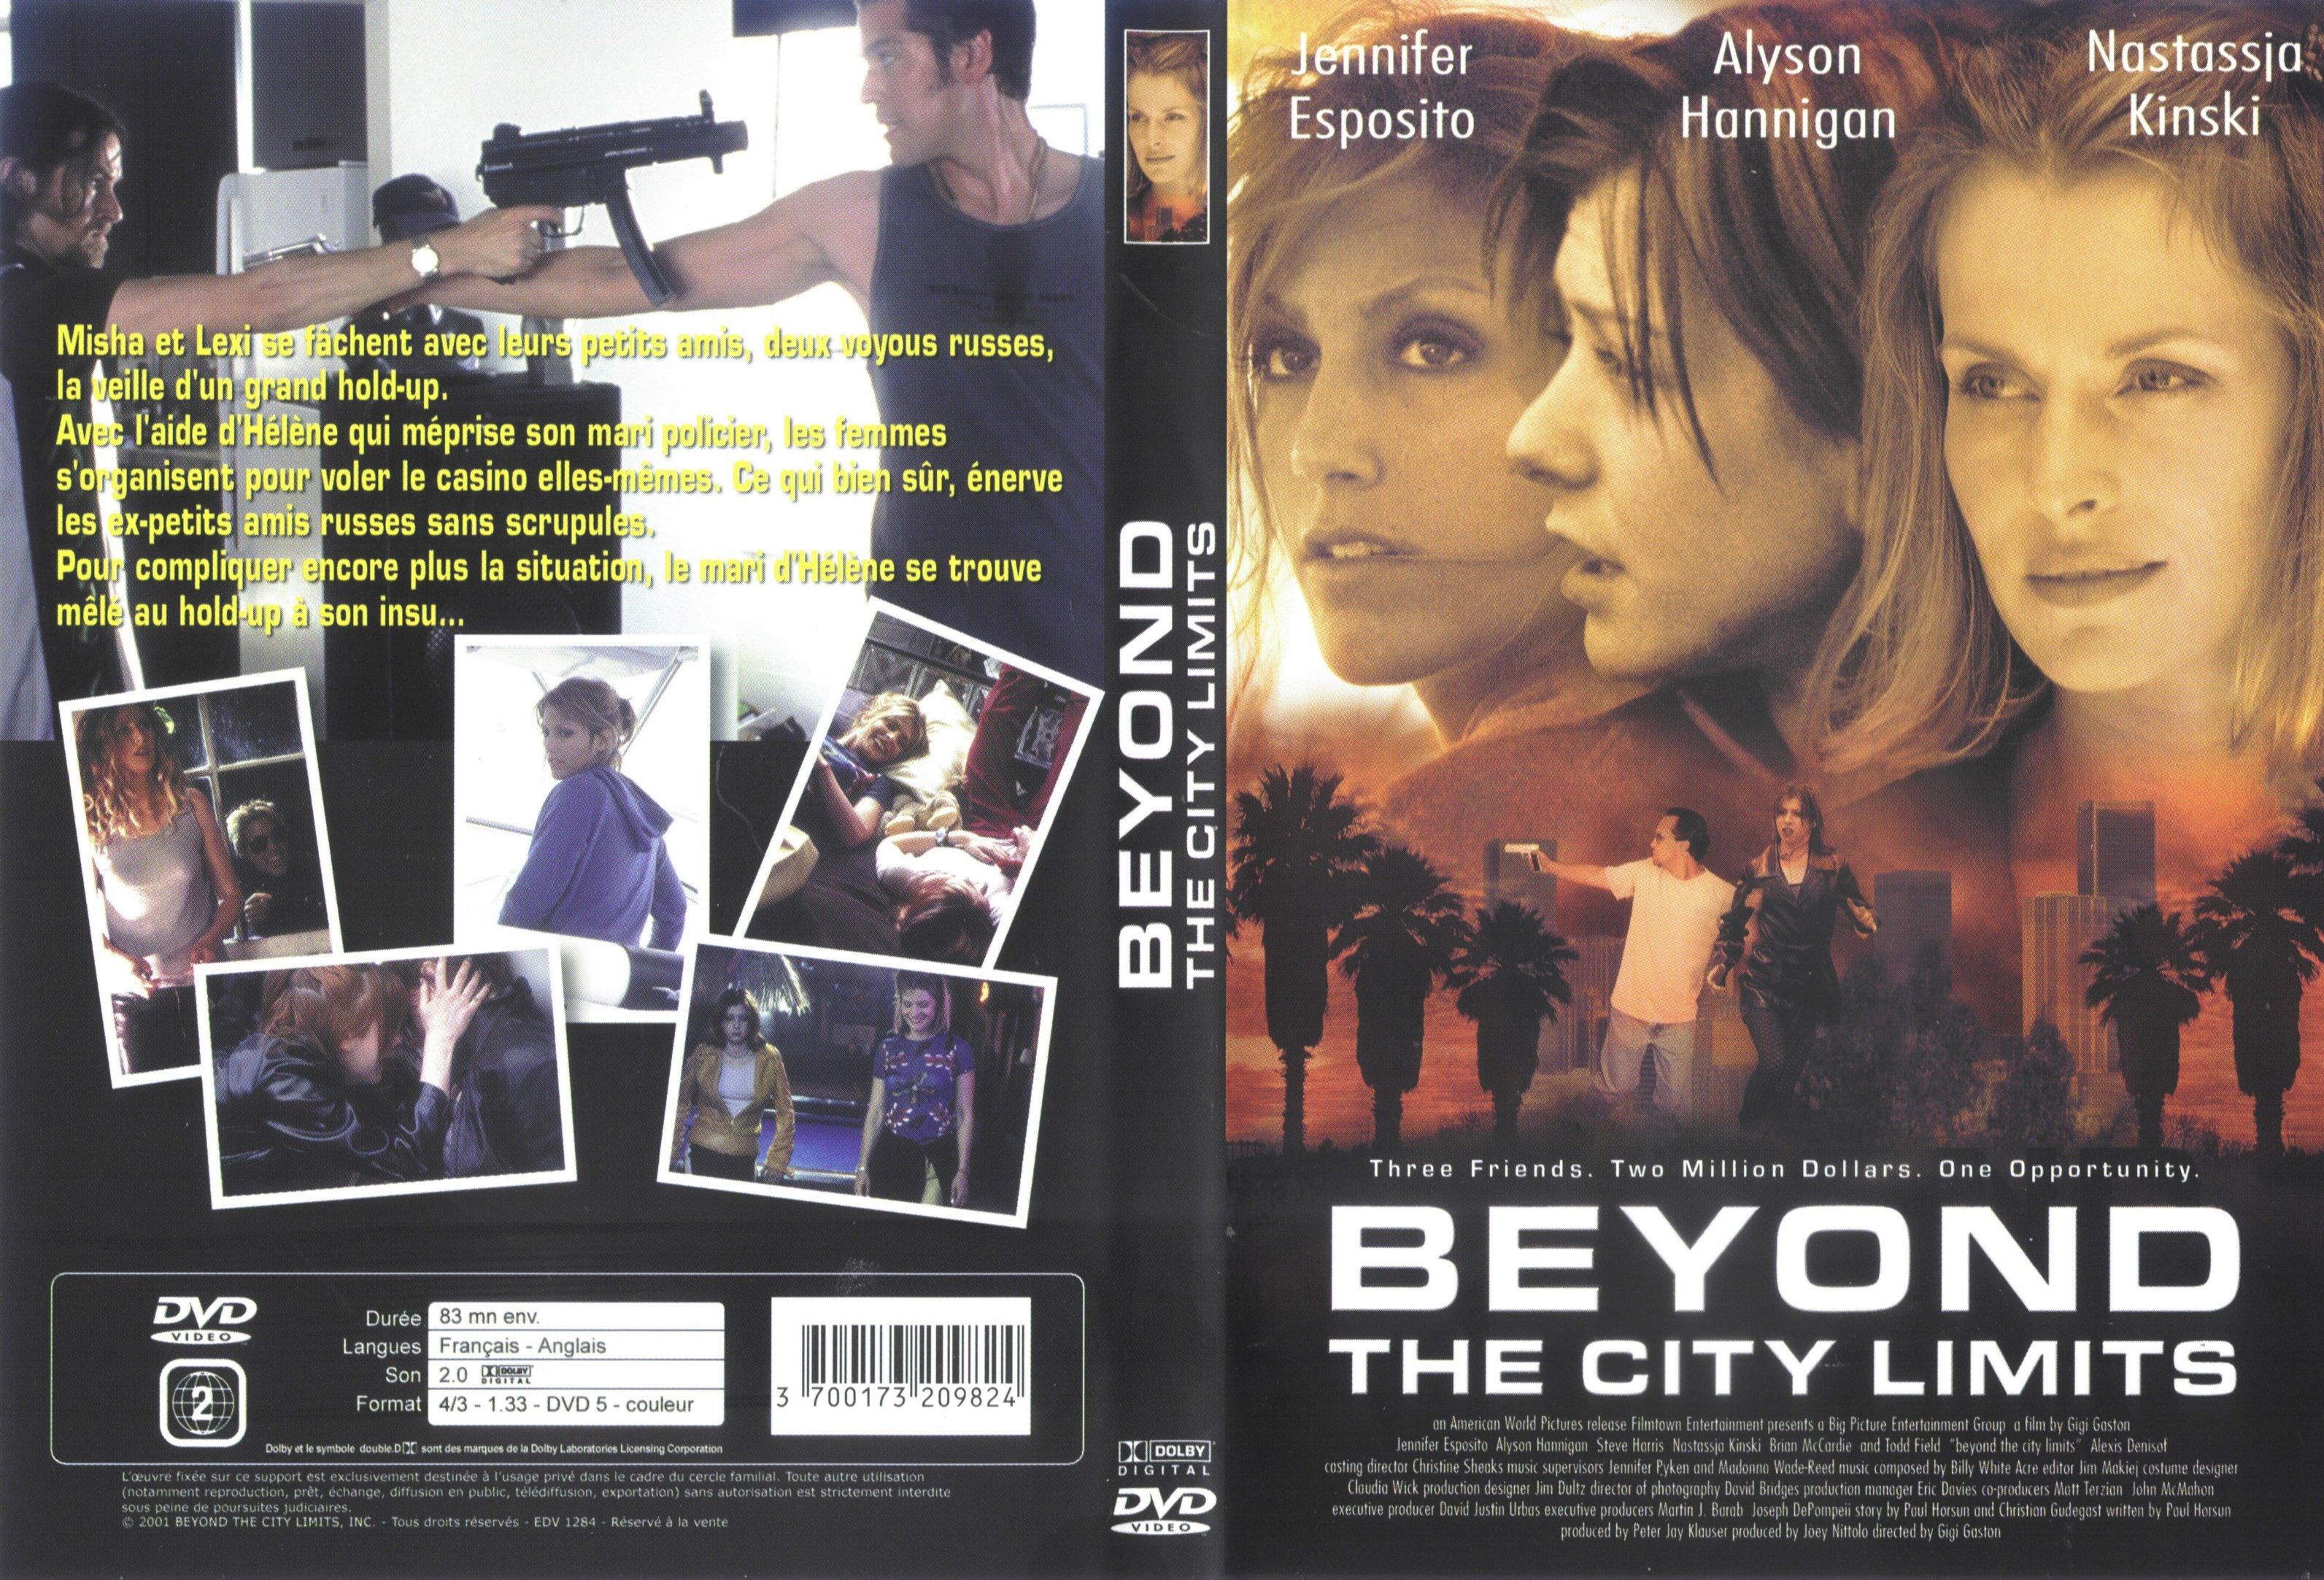 Jaquette DVD Beyond the city limits